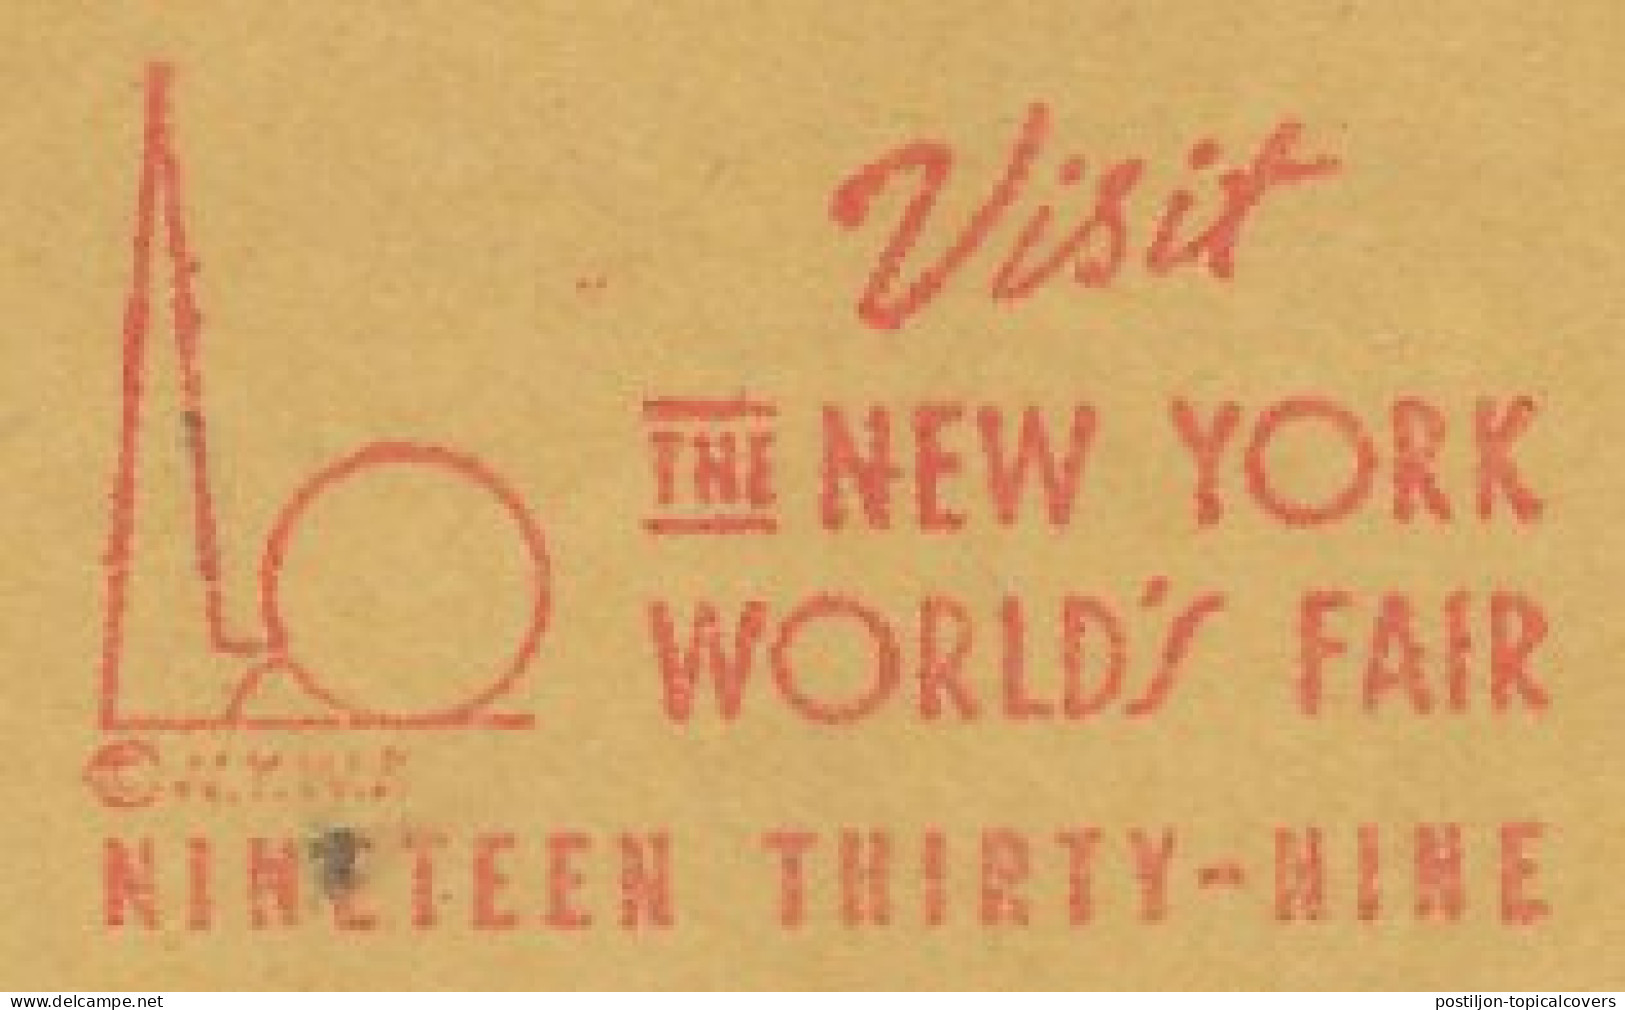 Meter Cut USA 1939 World Fair - New York - Unclassified